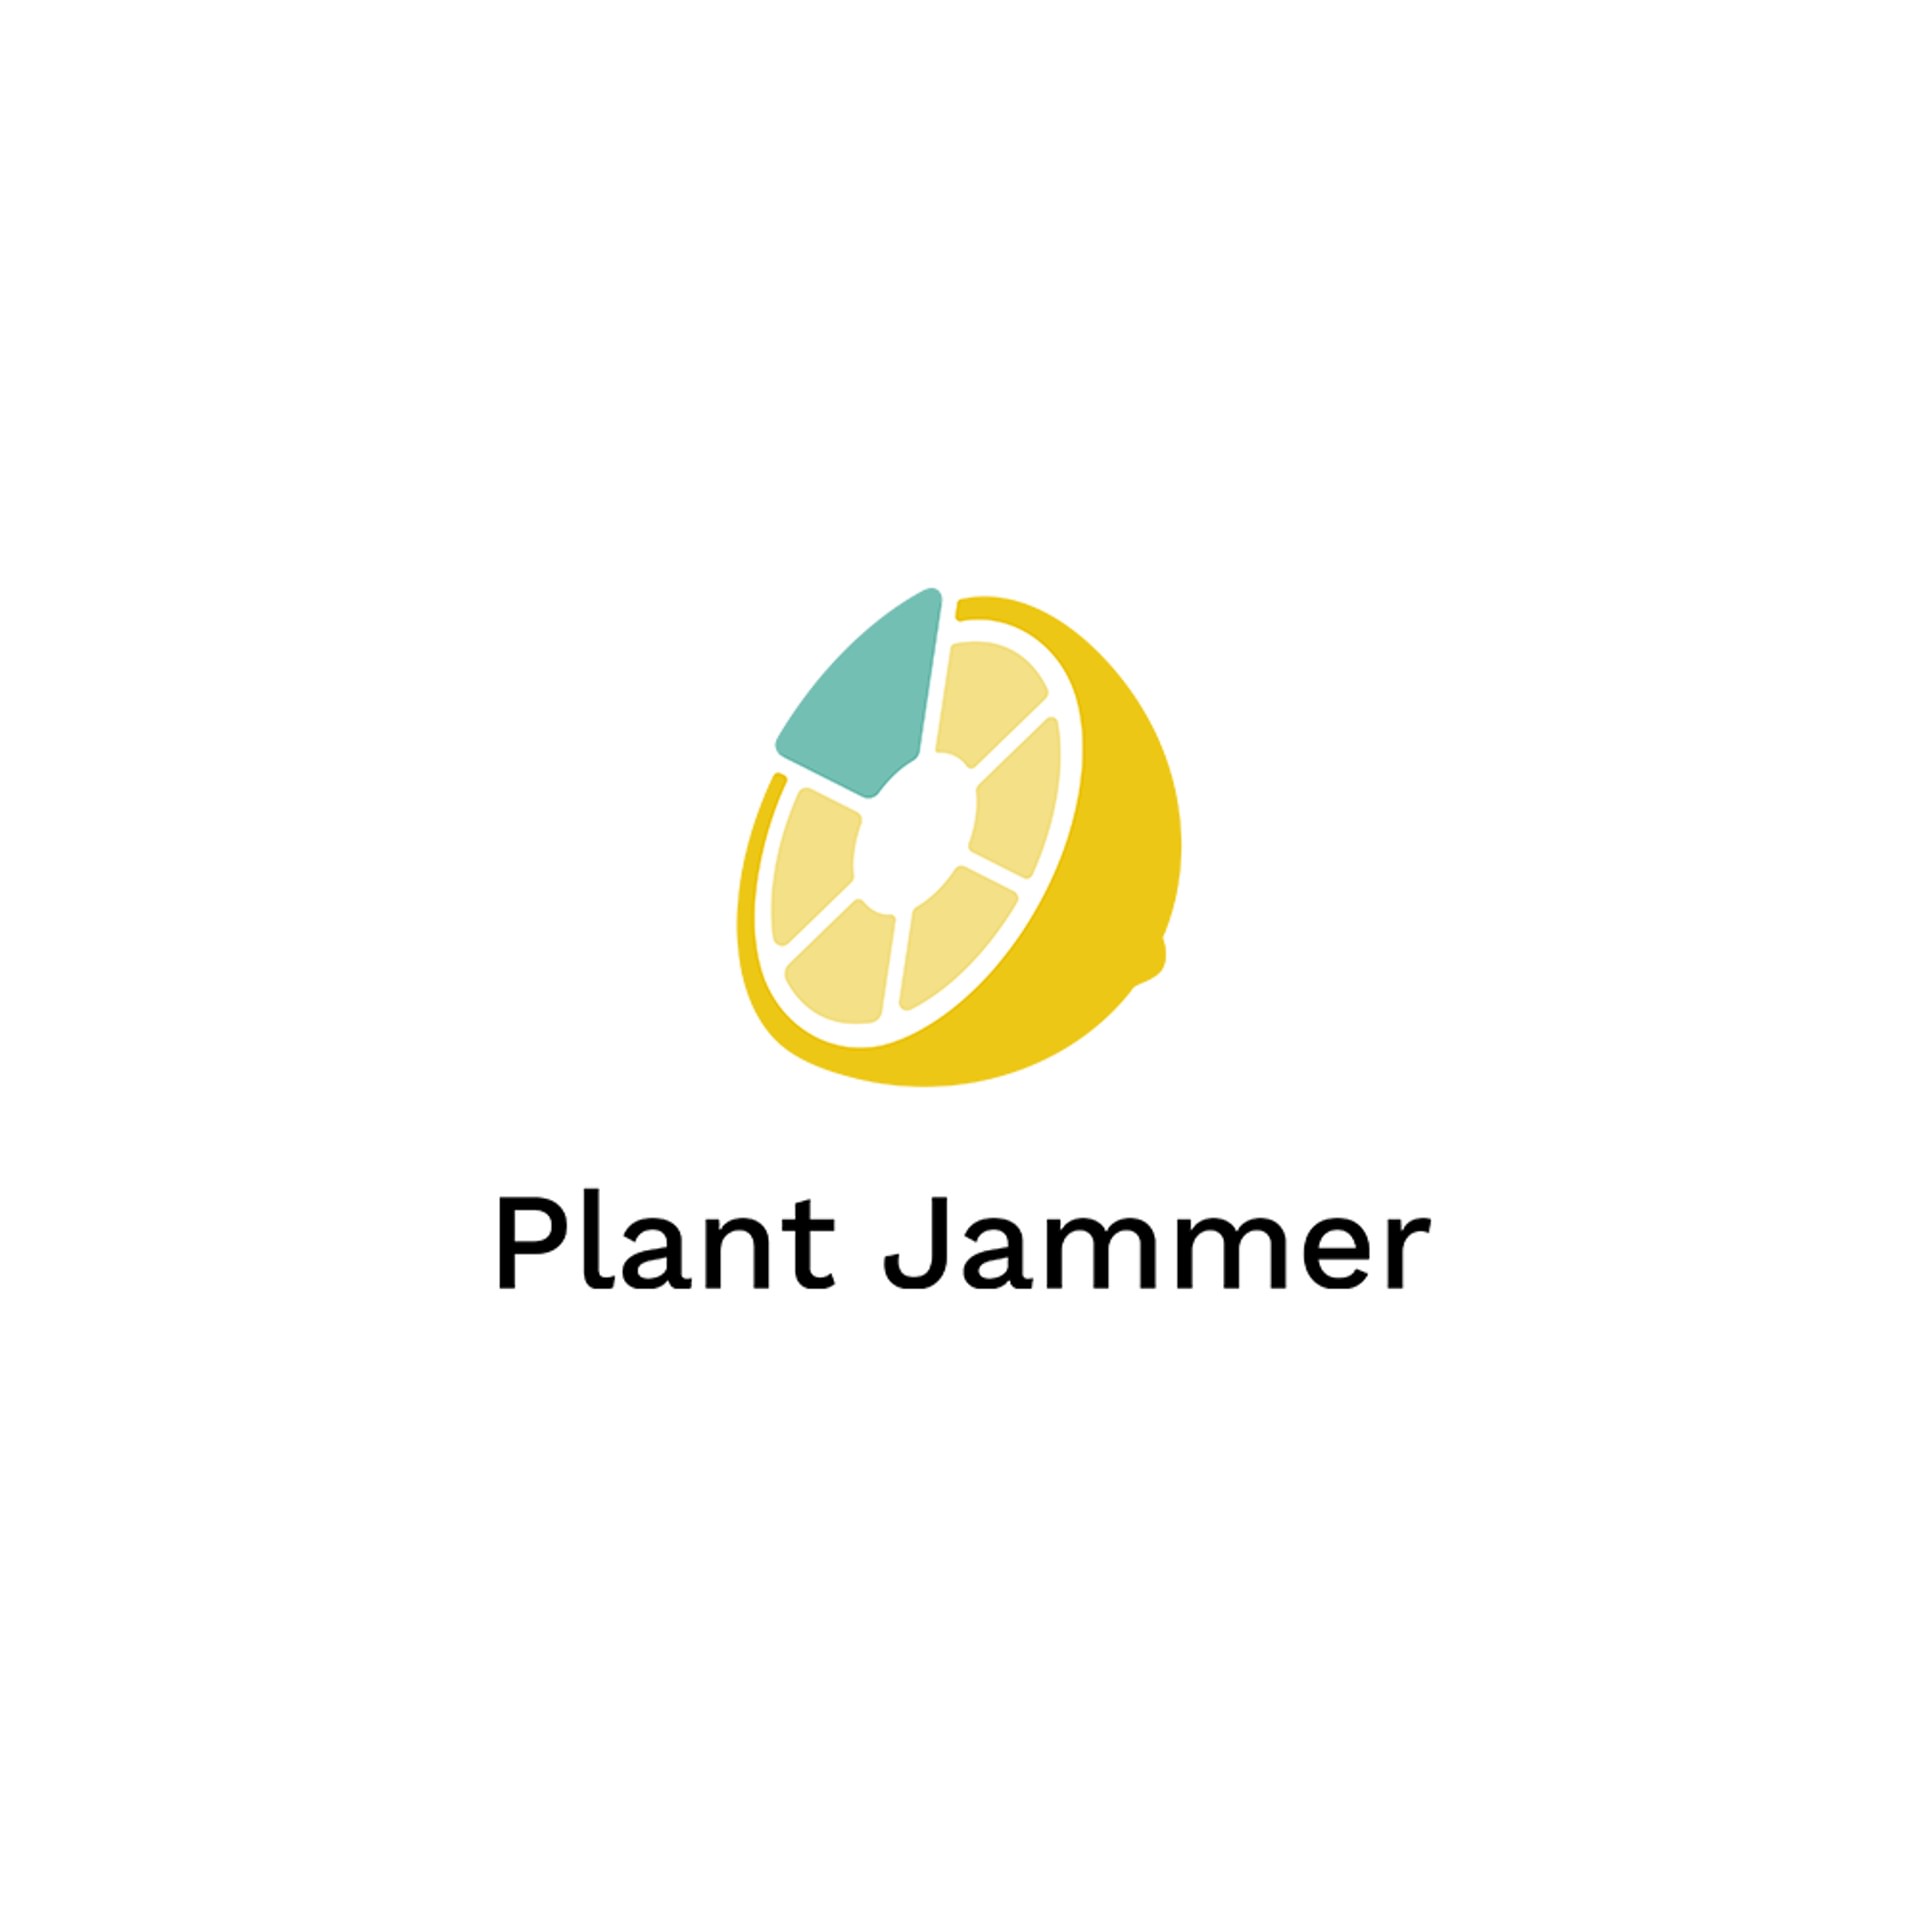 Plant Jammer website